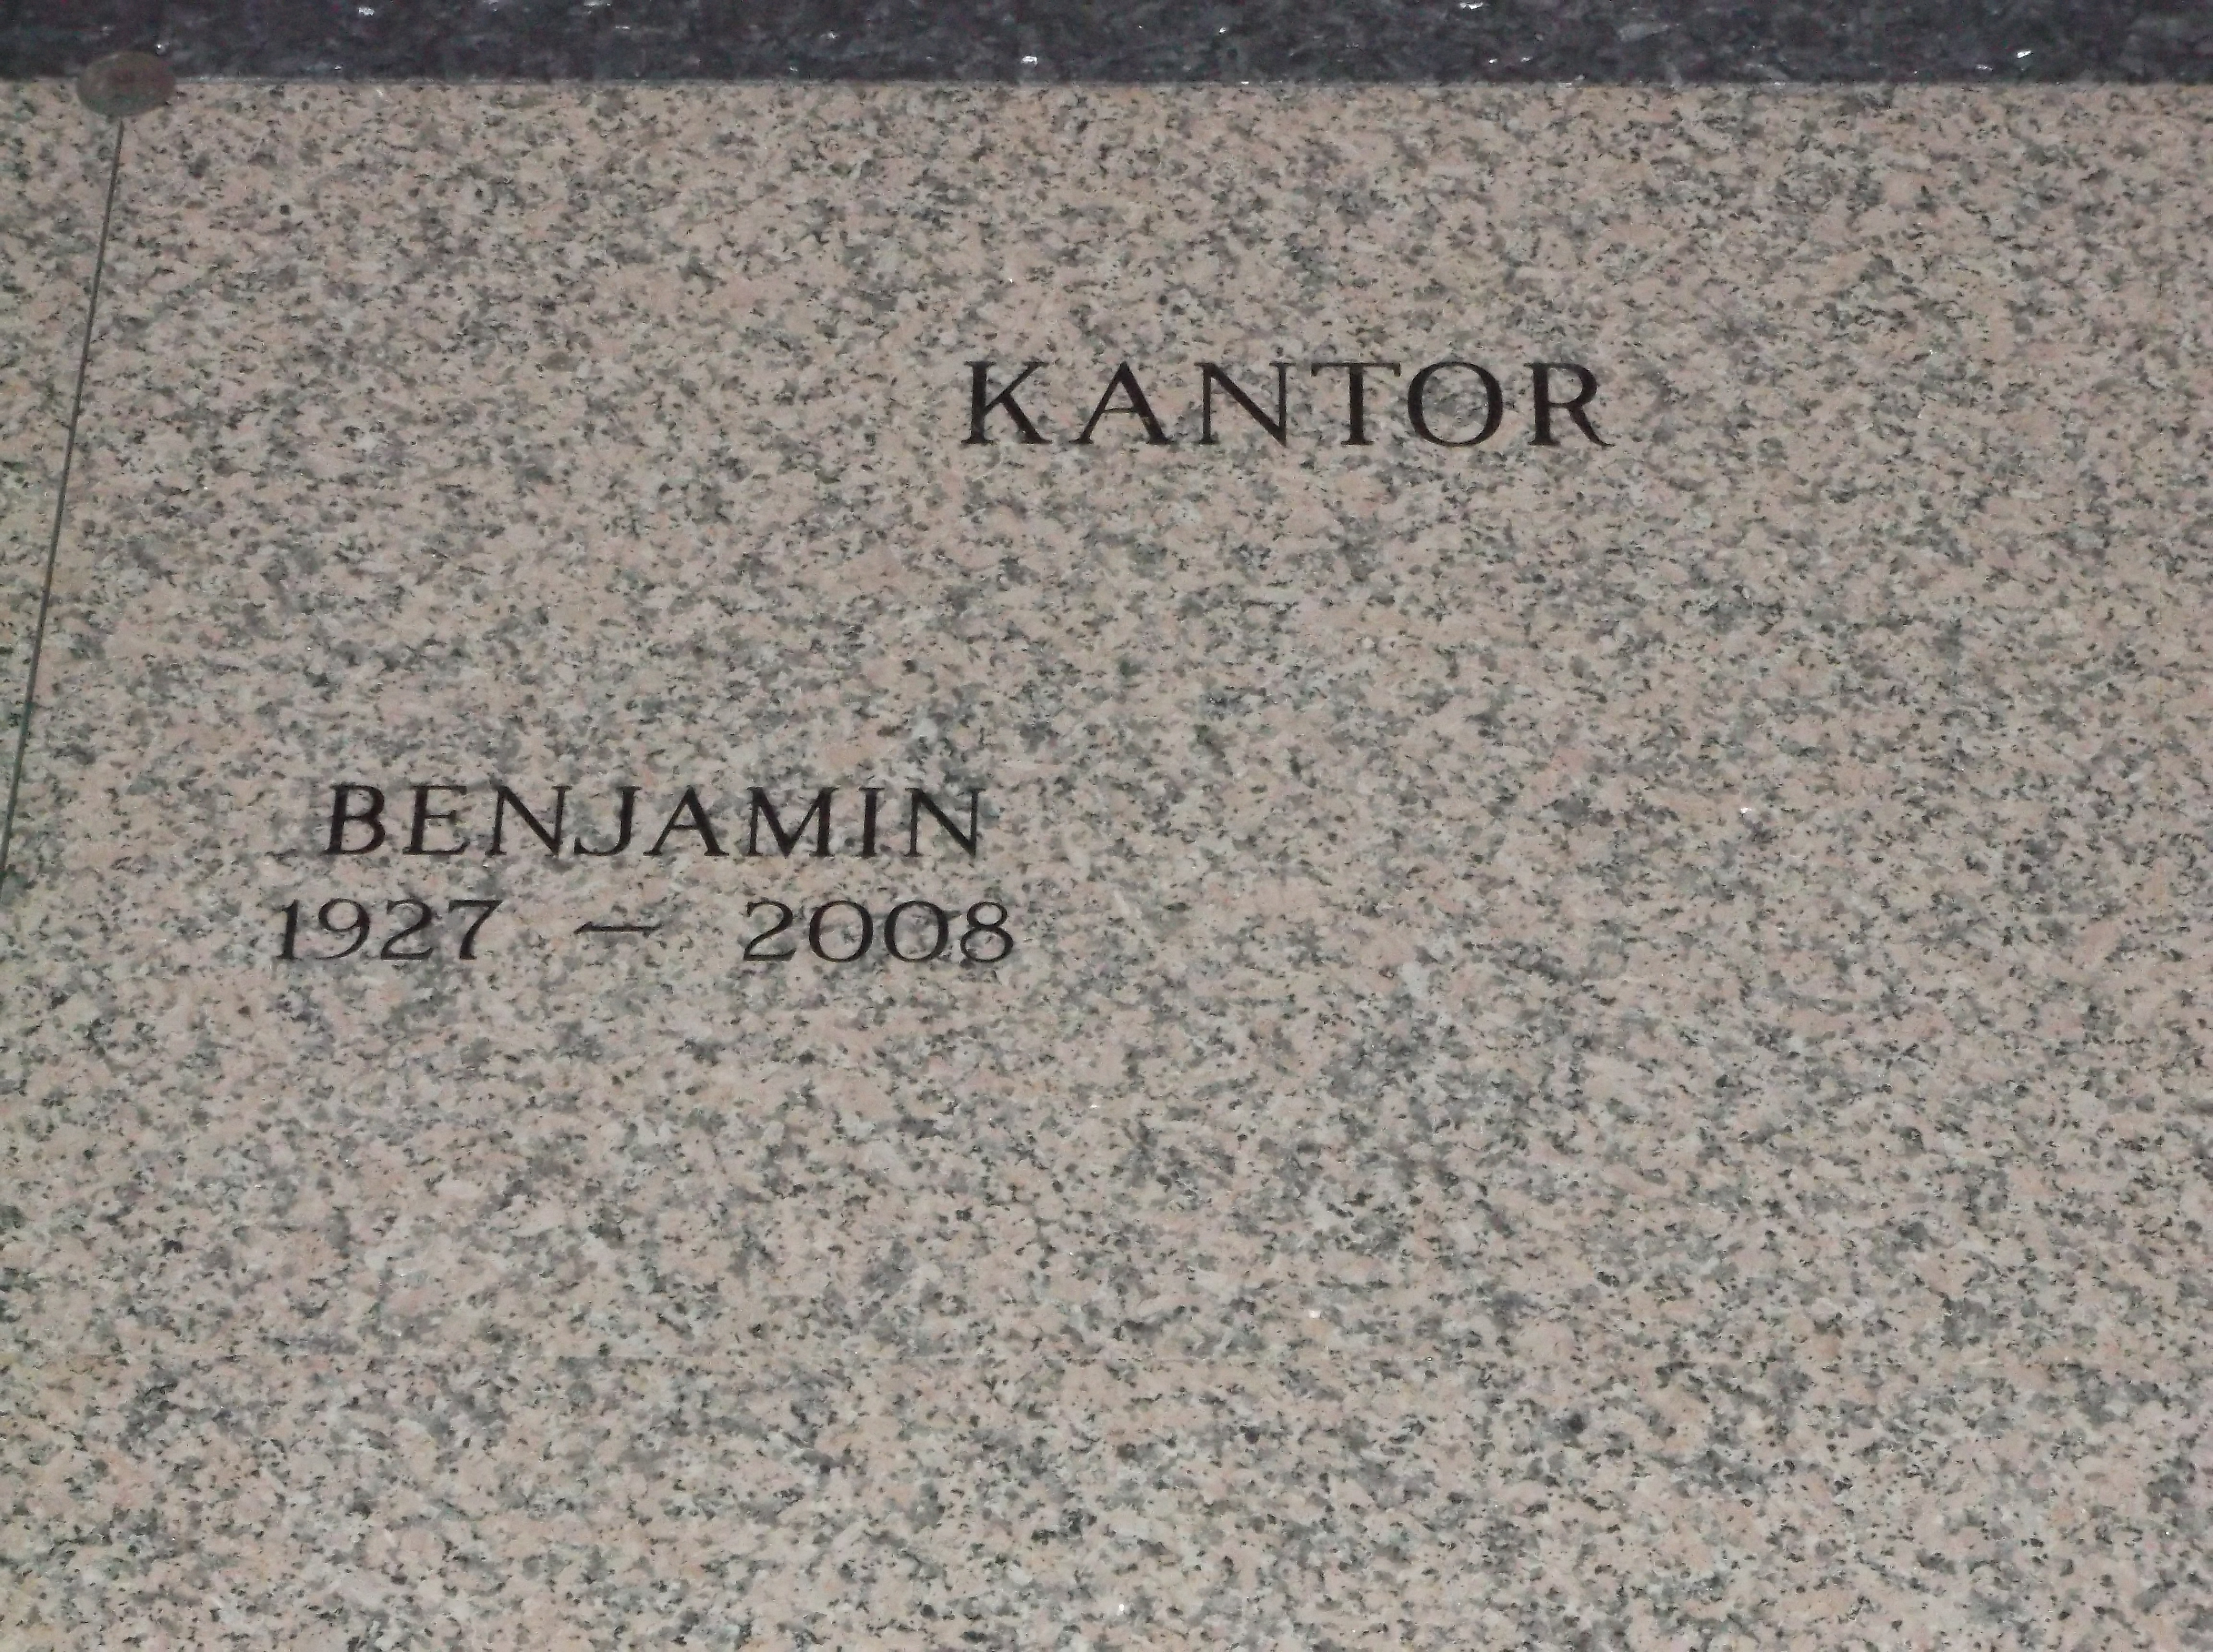 Benjamin Kantor